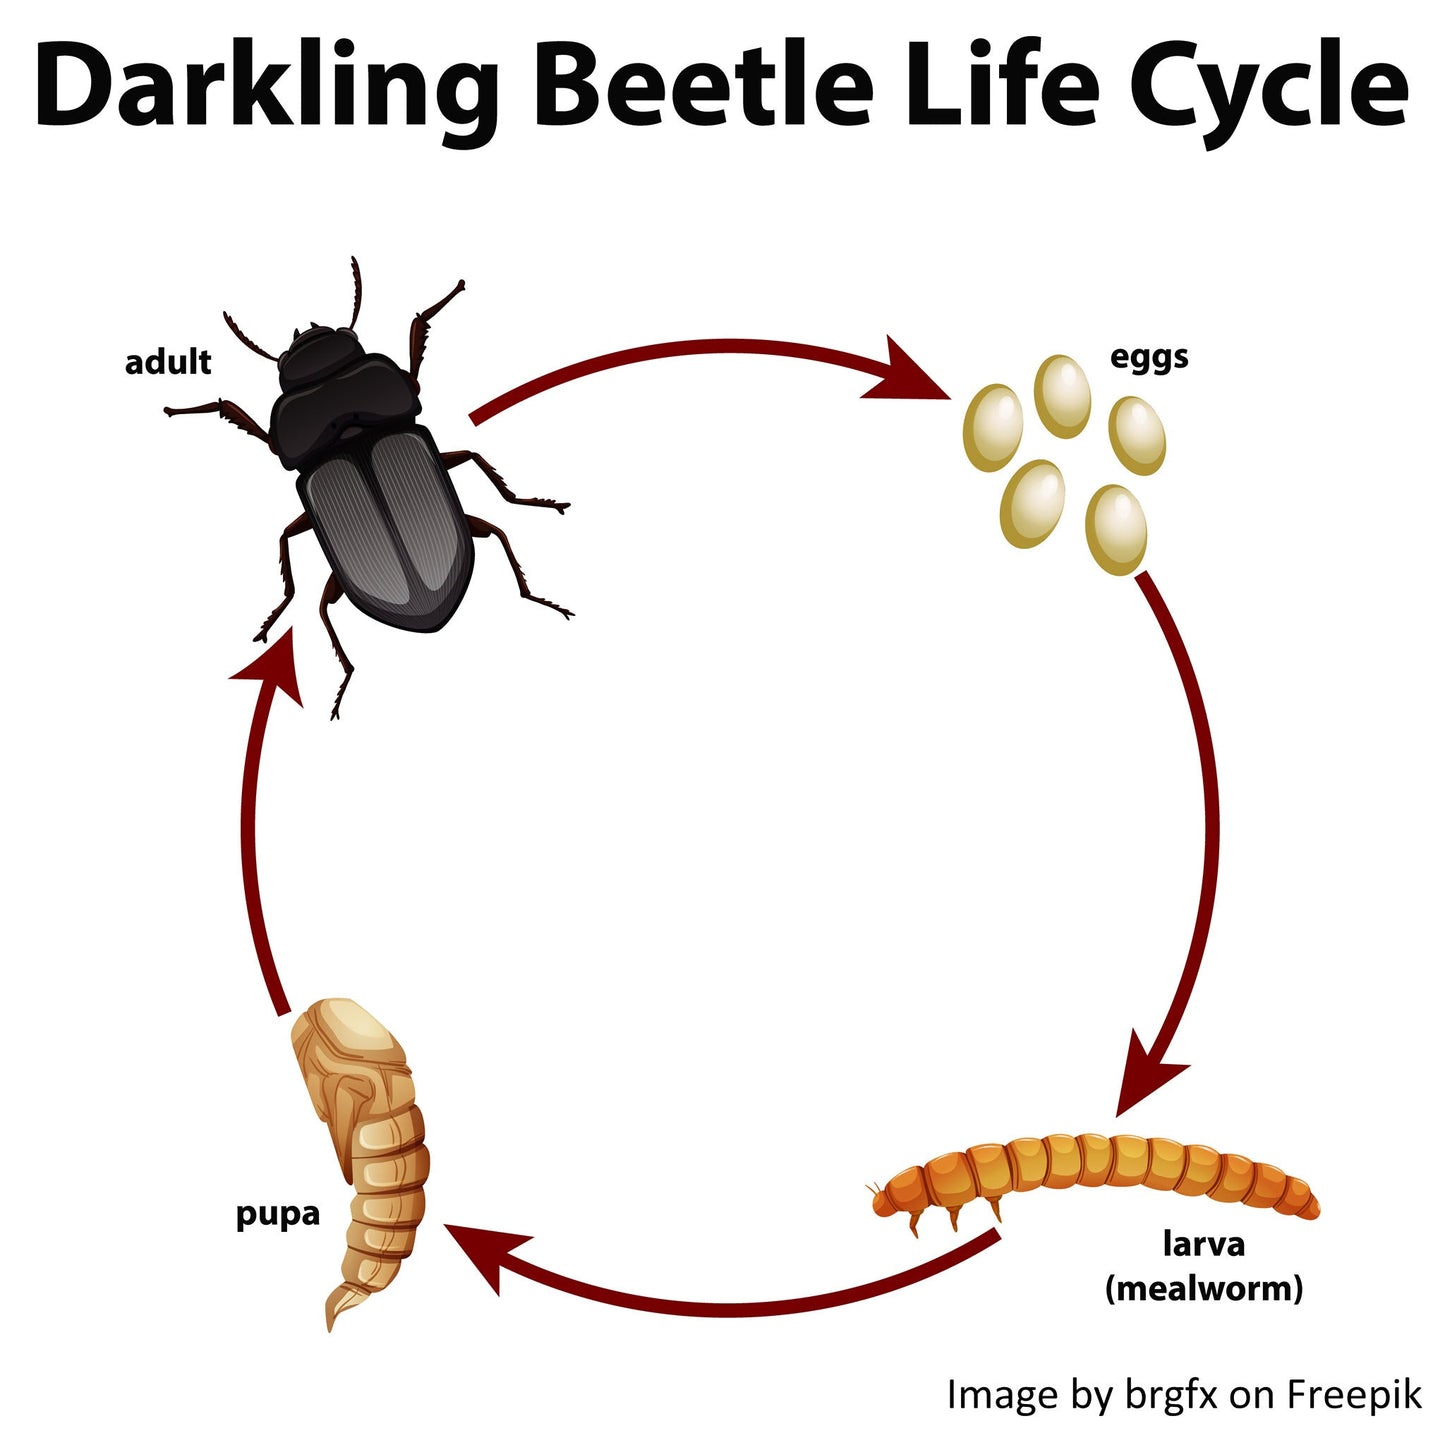 Darkling beetle lifecycle.